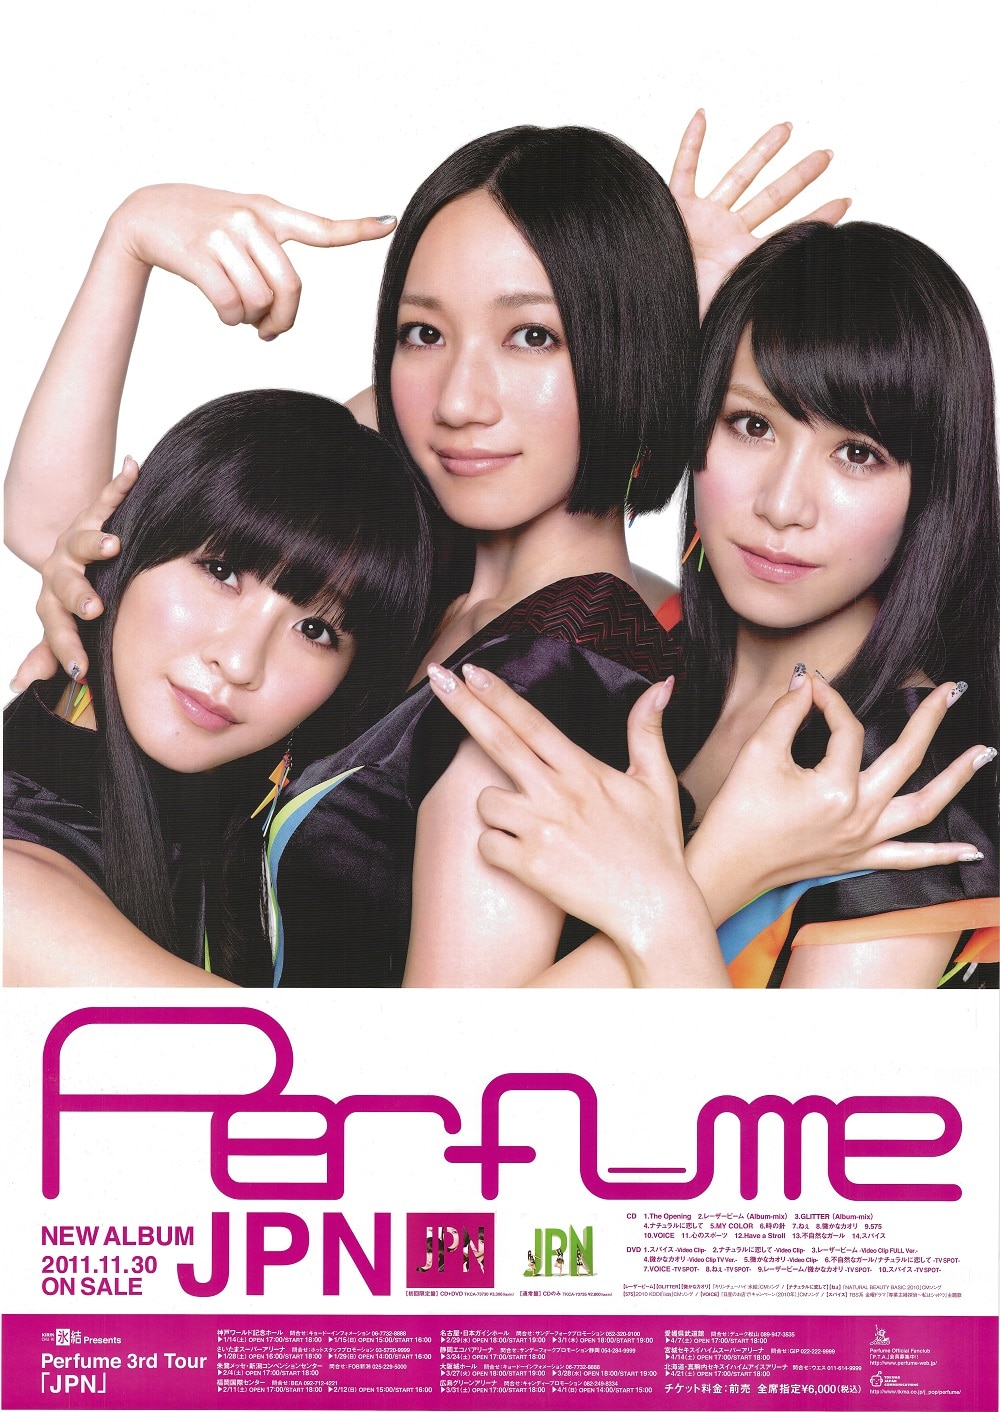 Perfume JPN 販促用ポスター B2 | まんだらけ Mandarake